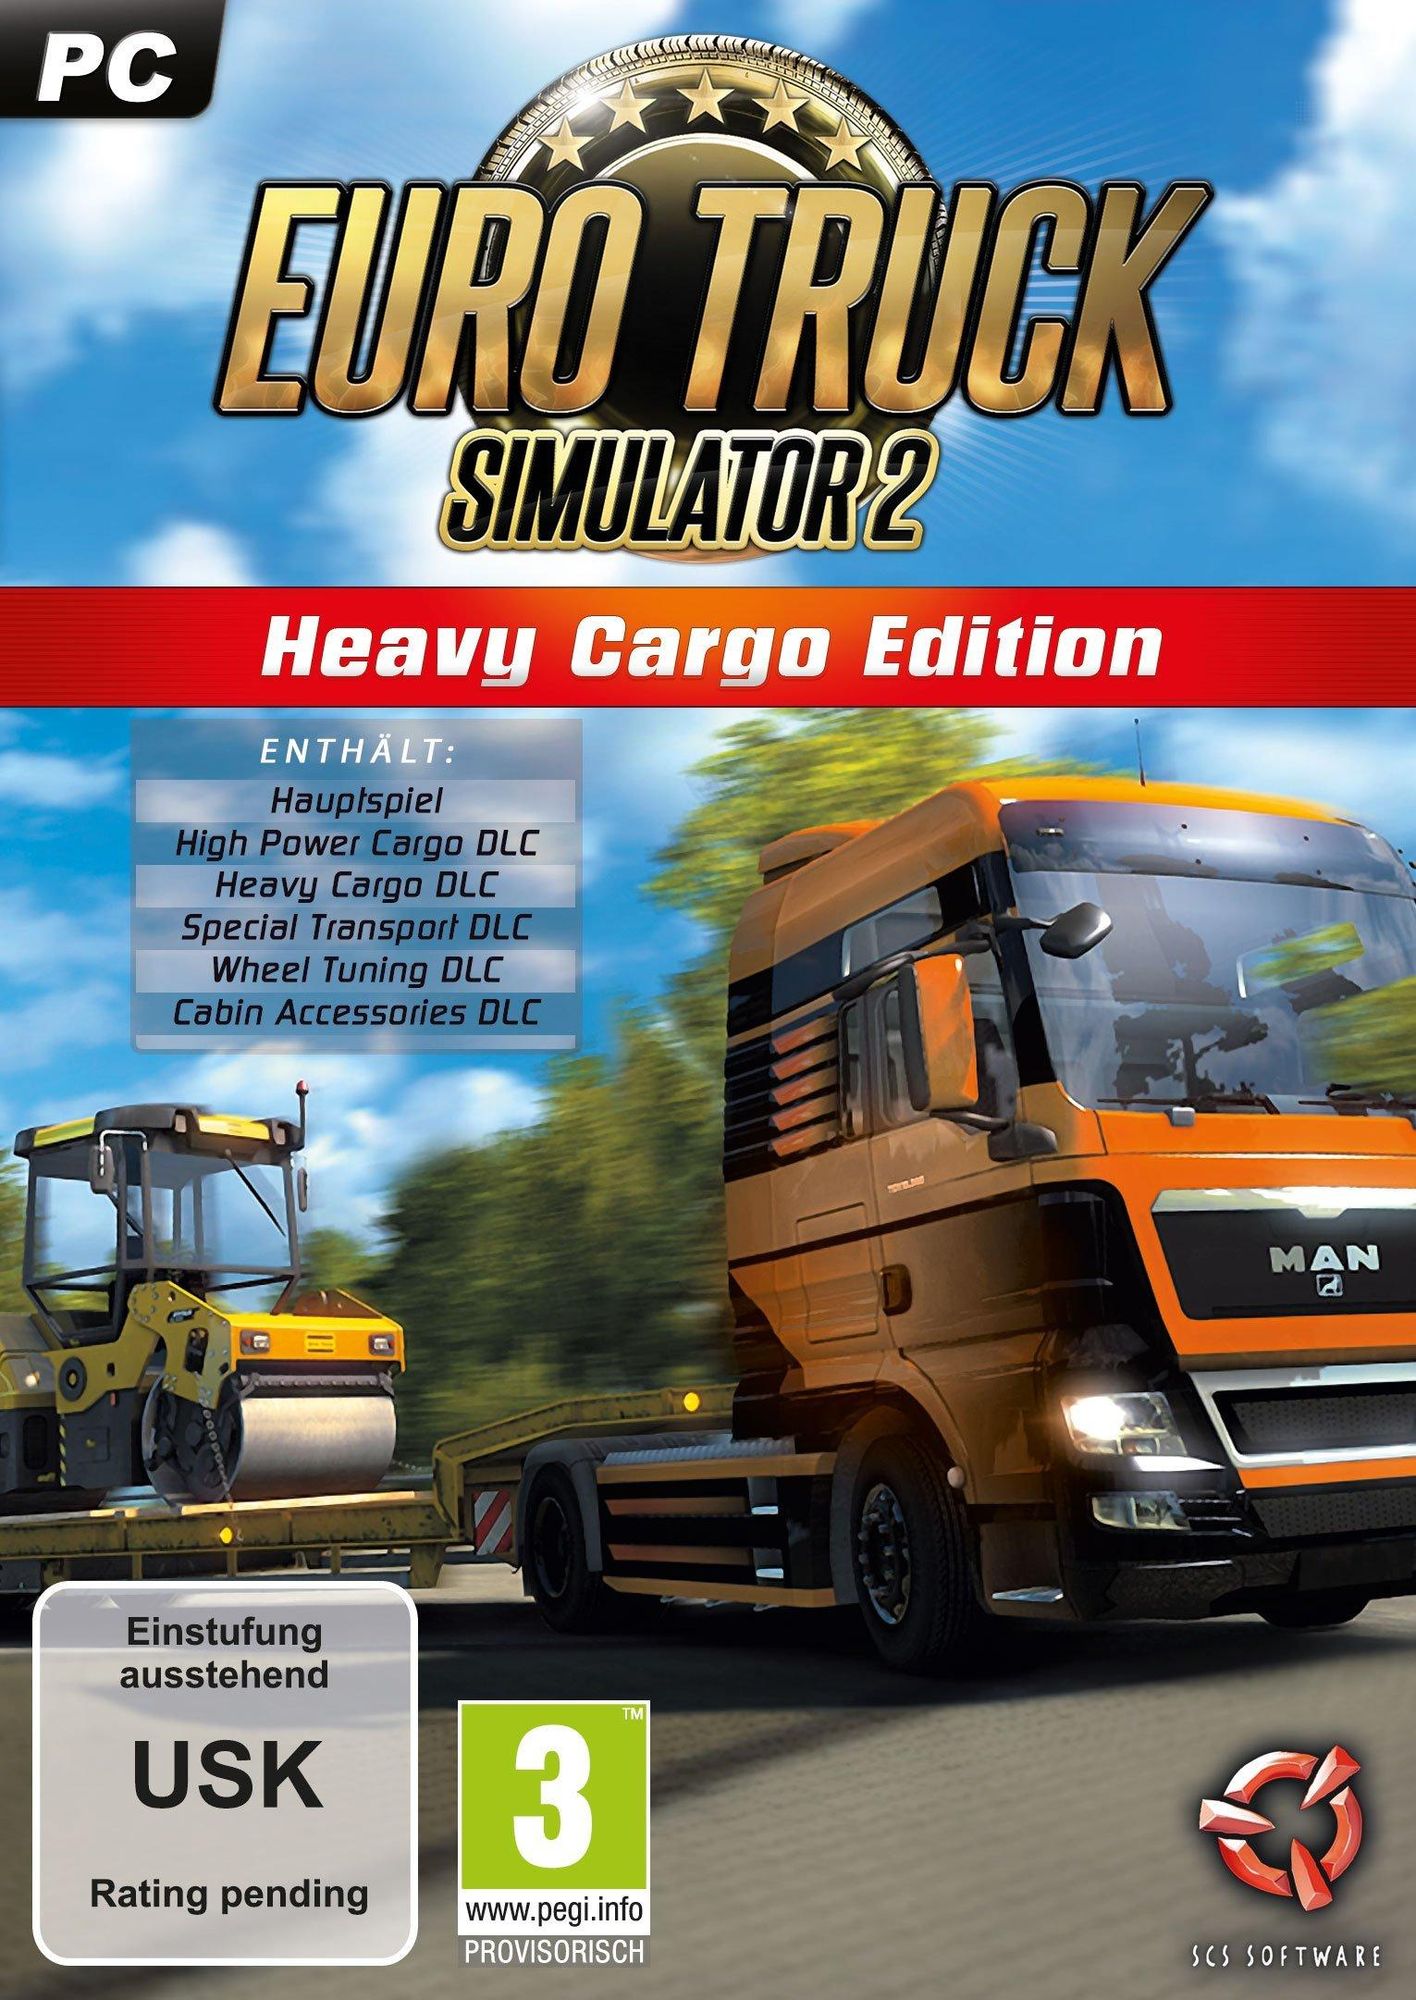 https://images.thalia.media/-/BF2000-2000/07543a5acd0f4960a72c51e2781f4eee/euro-truck-simulator-2-heavy-cargo-edition-pc.jpeg